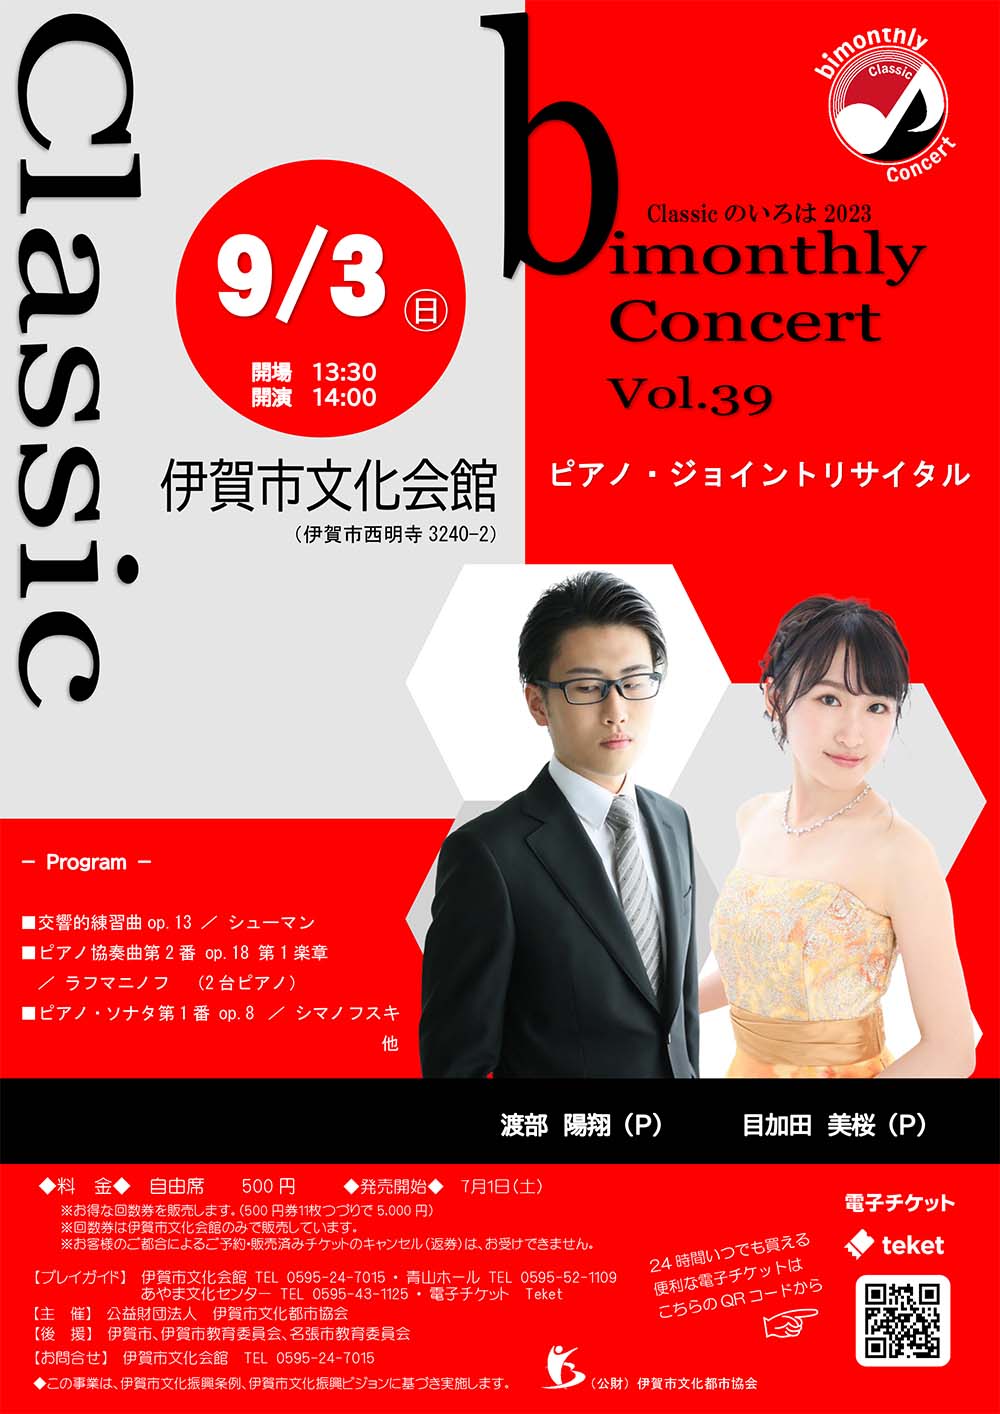 bimonthly Concert Vol.39 ピアノ・ジョイントリサイタル